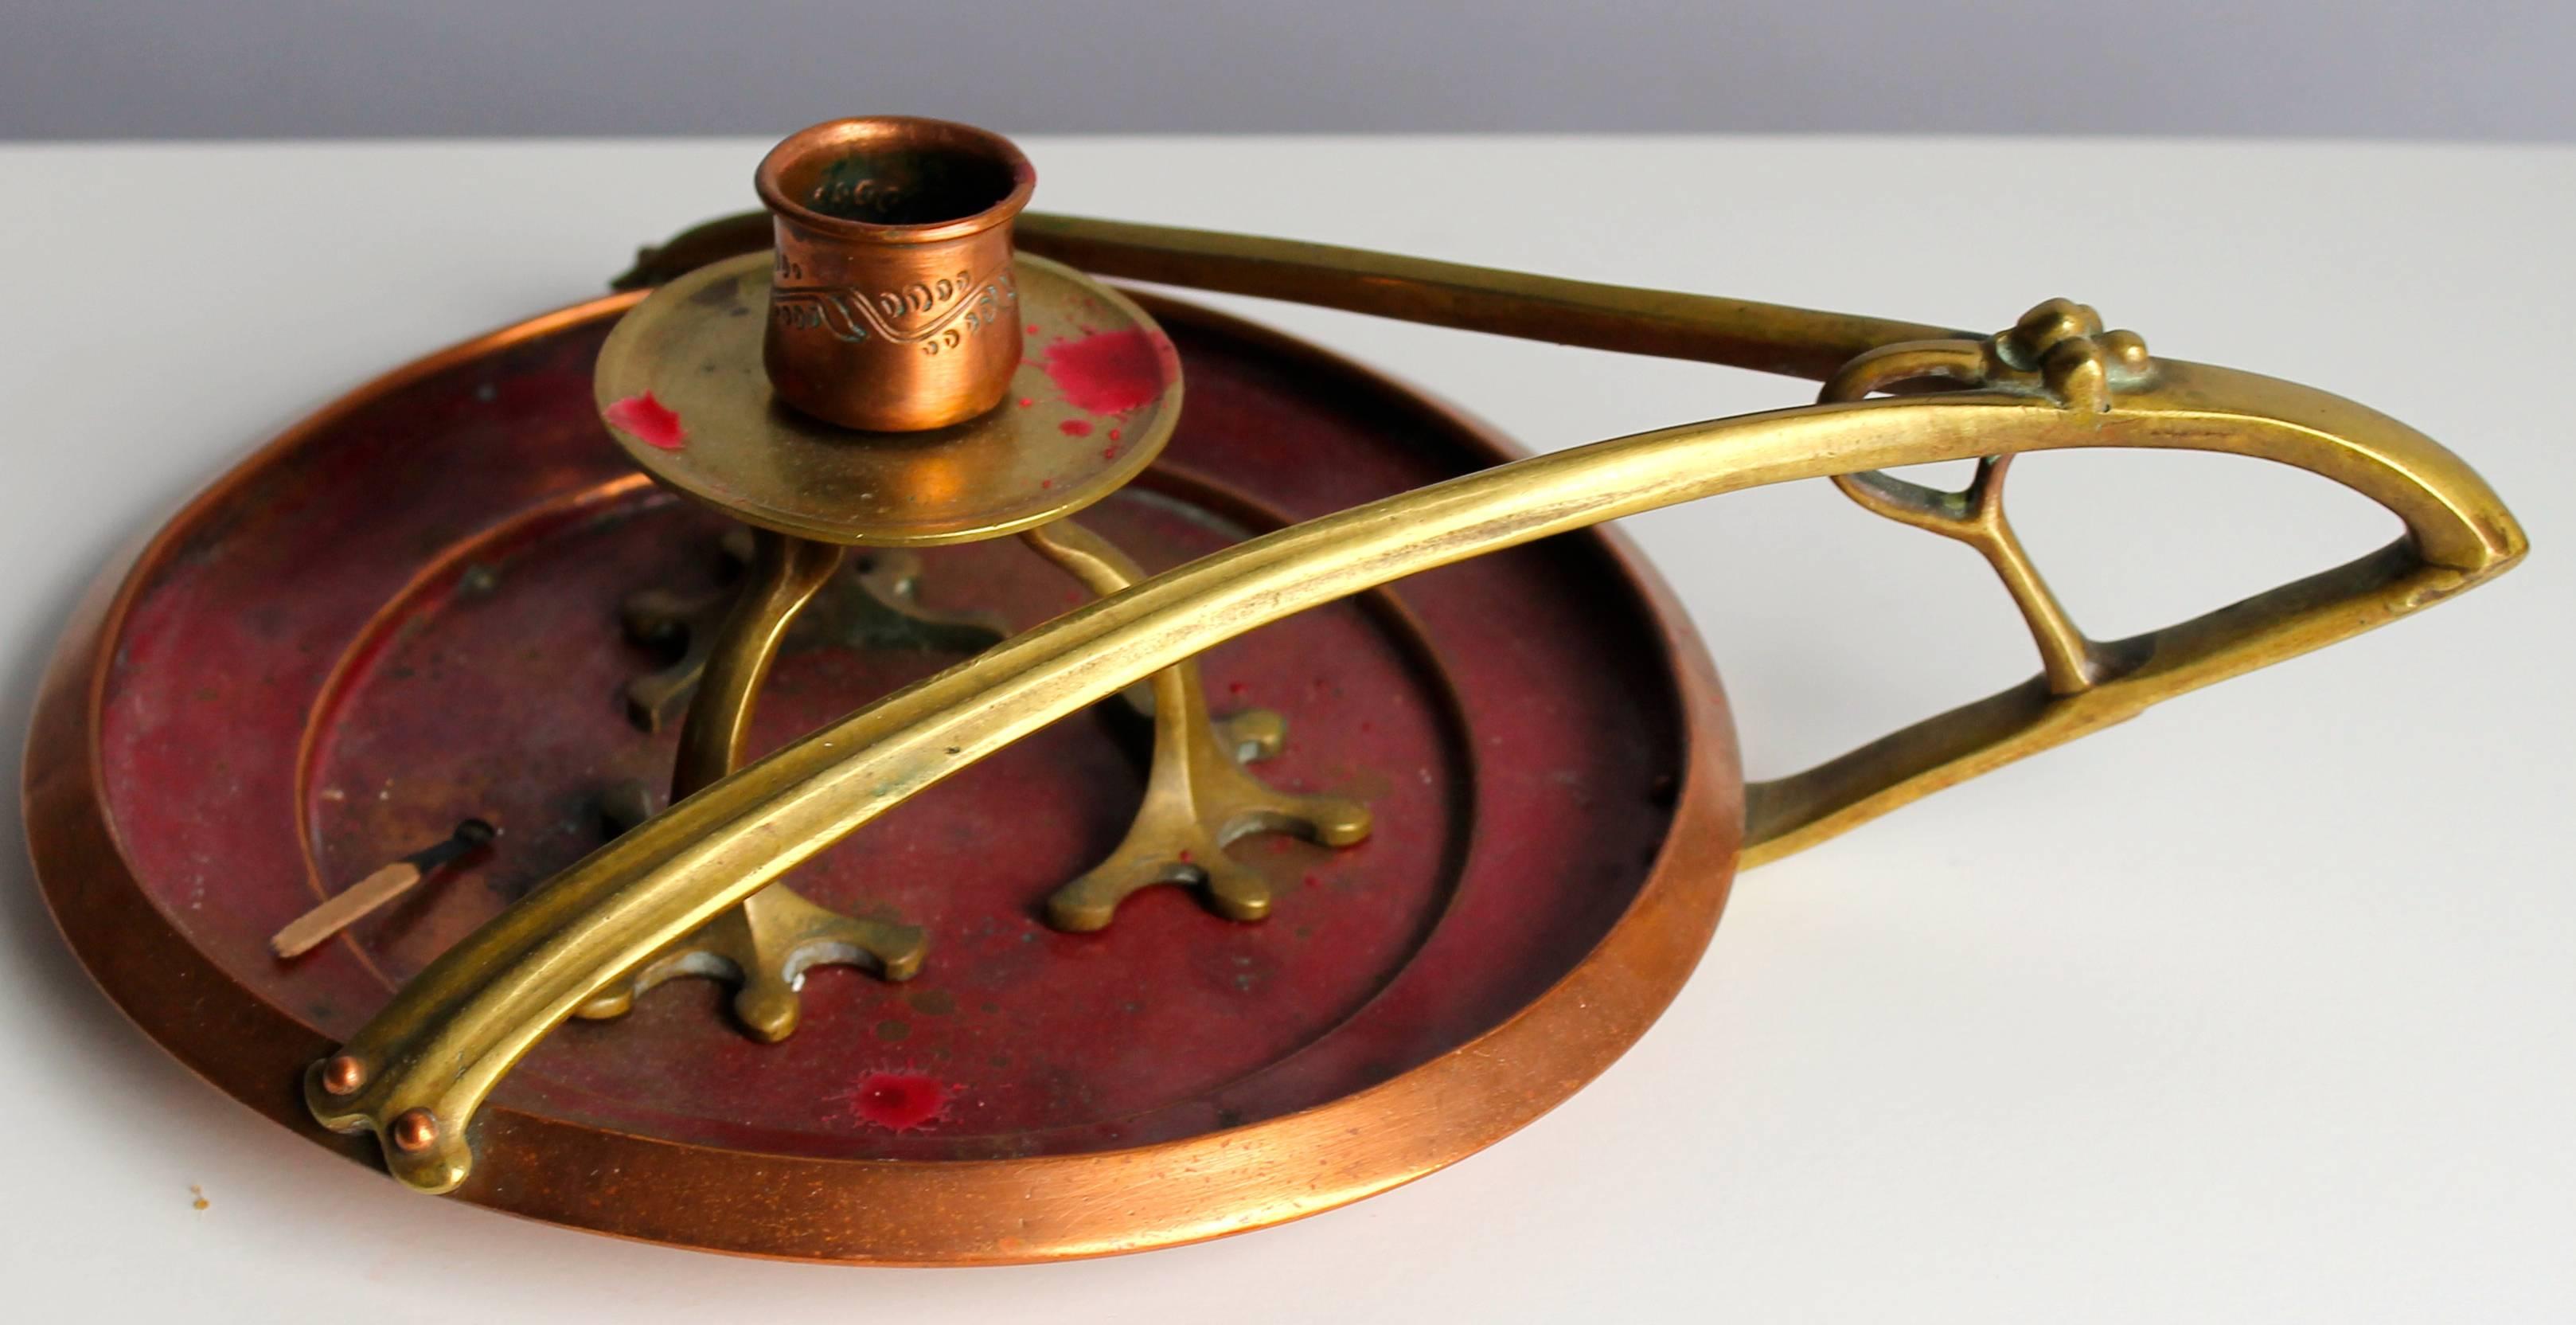 Arts and Crafts copper and brass candleholder Jugendstil Aesthetic Movement. Candleholder retains original patinated surface.